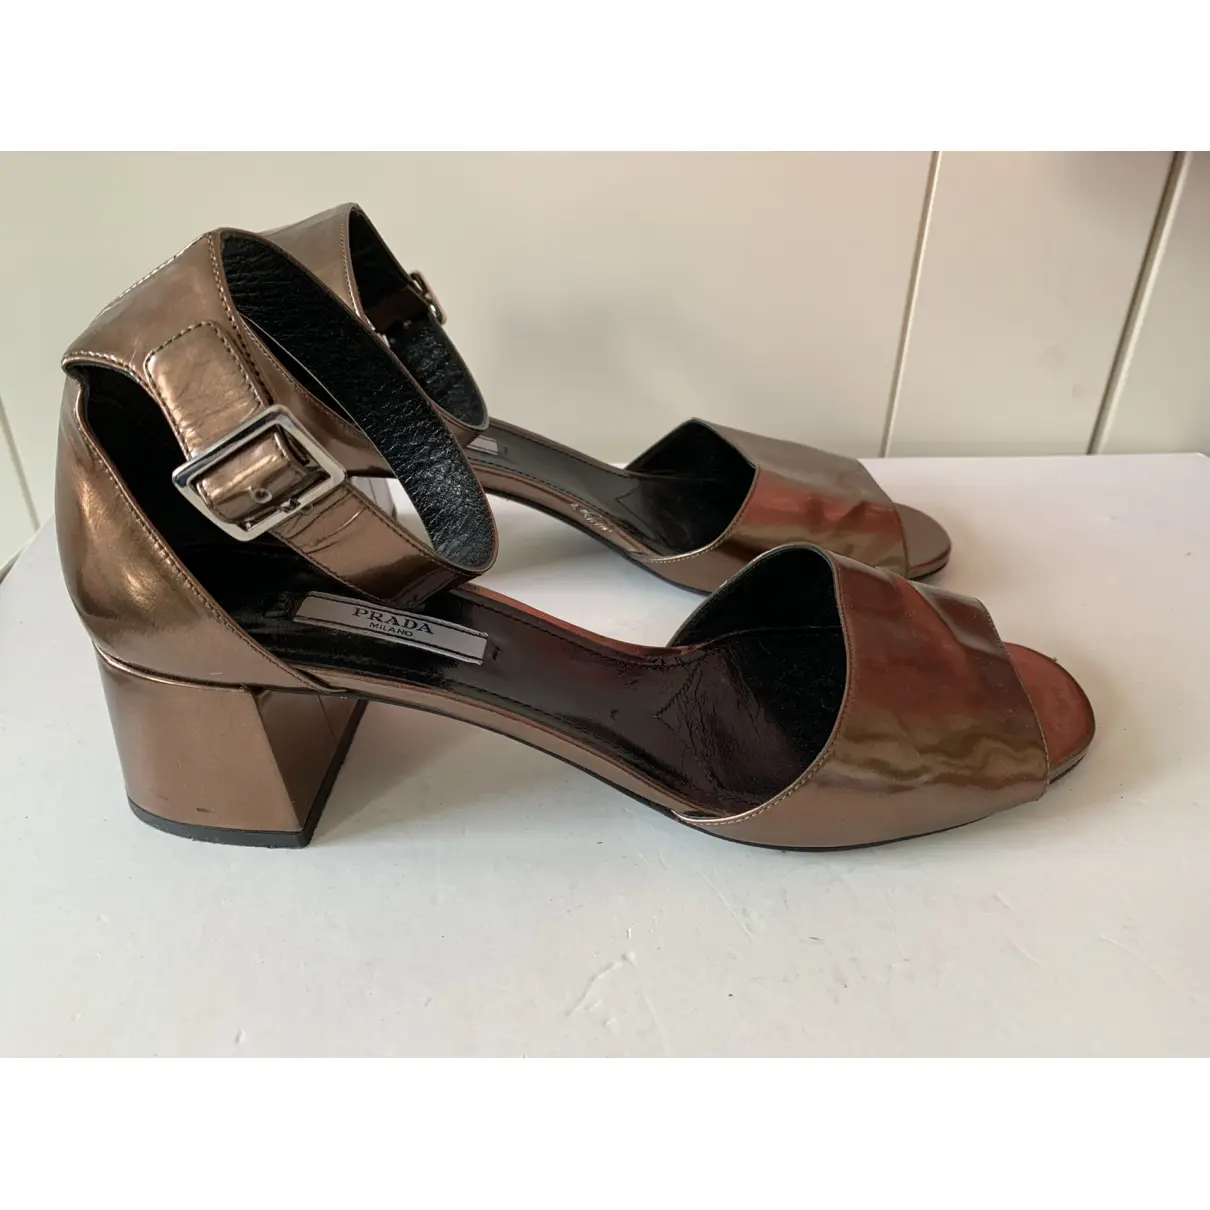 Buy Prada Patent leather sandal online